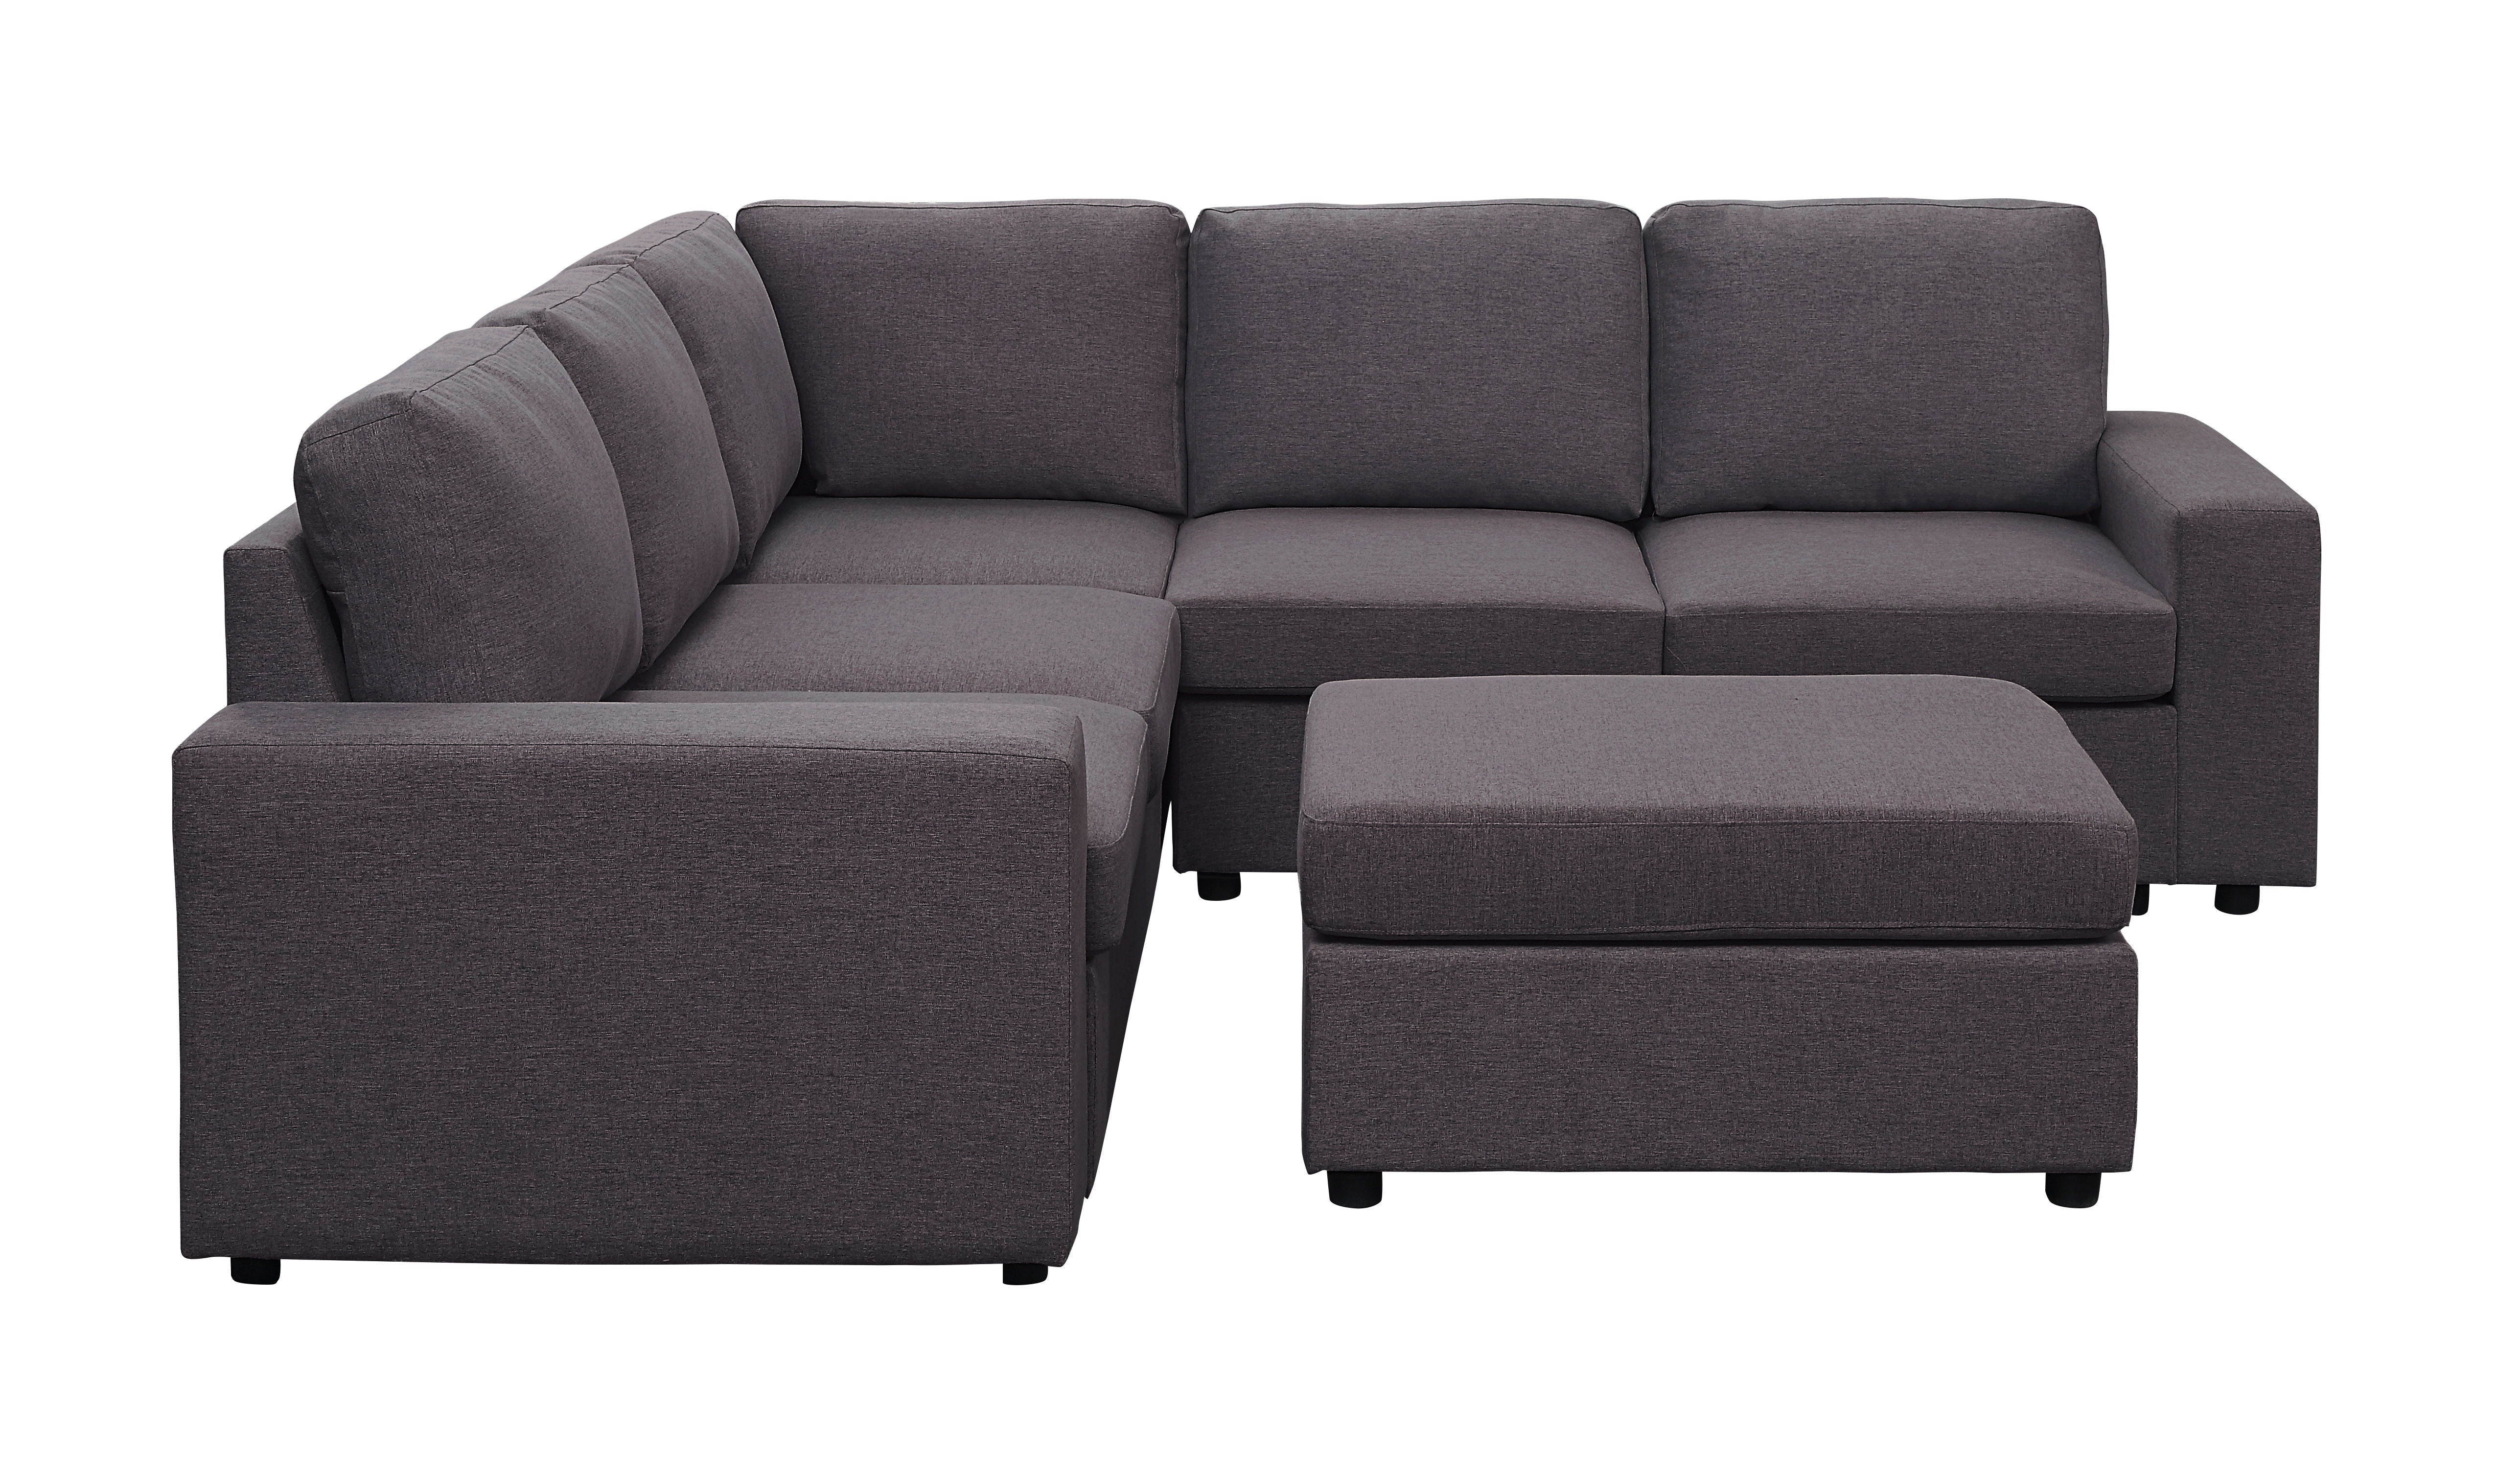 Elliot - Sectional Sofa With Ottoman - Dark Gray Linen